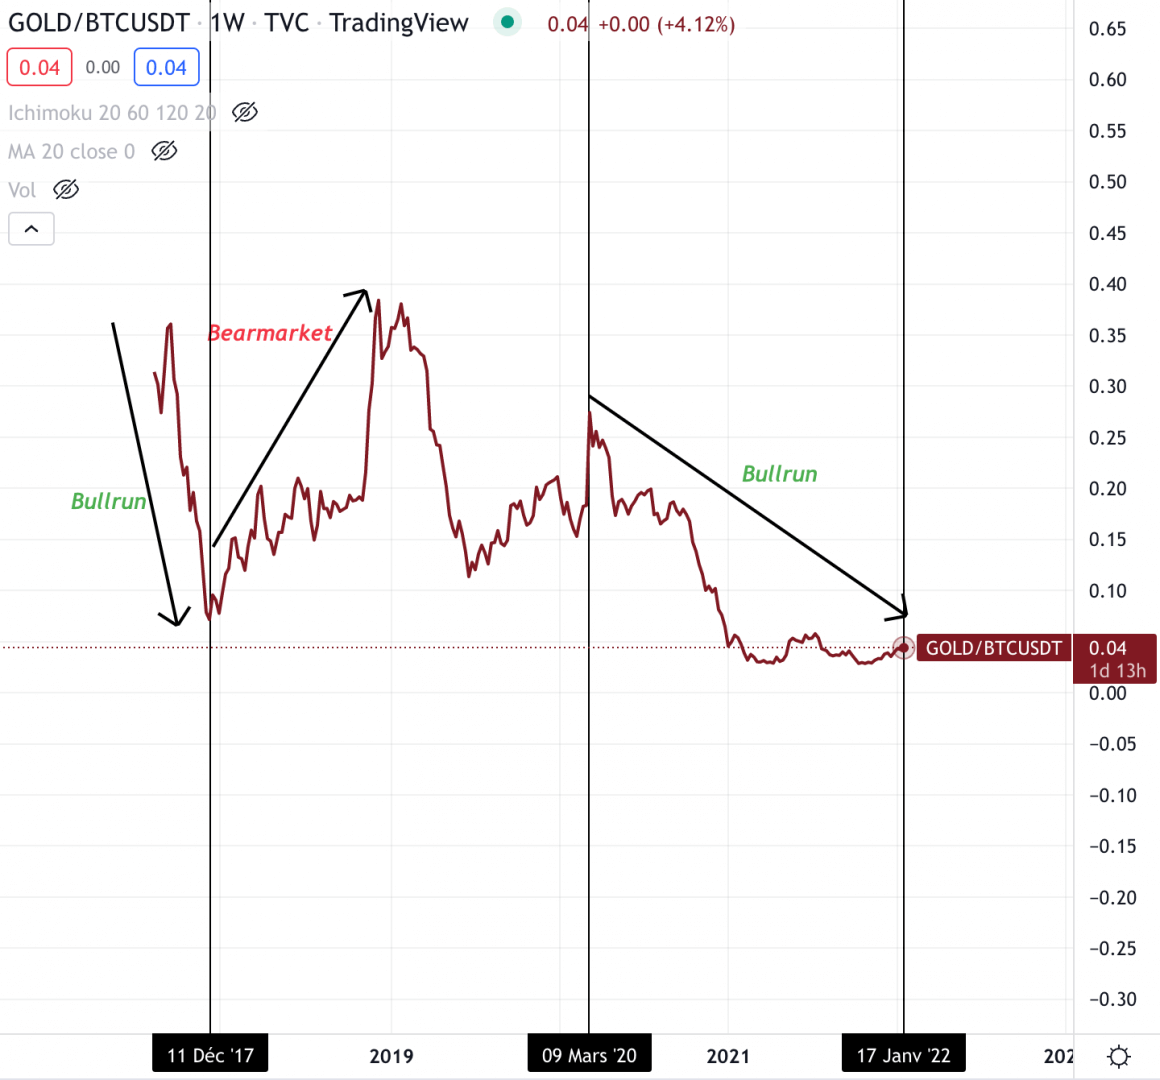 Bullrun/ Bearmarket alternation on the Gold/BTC pair.